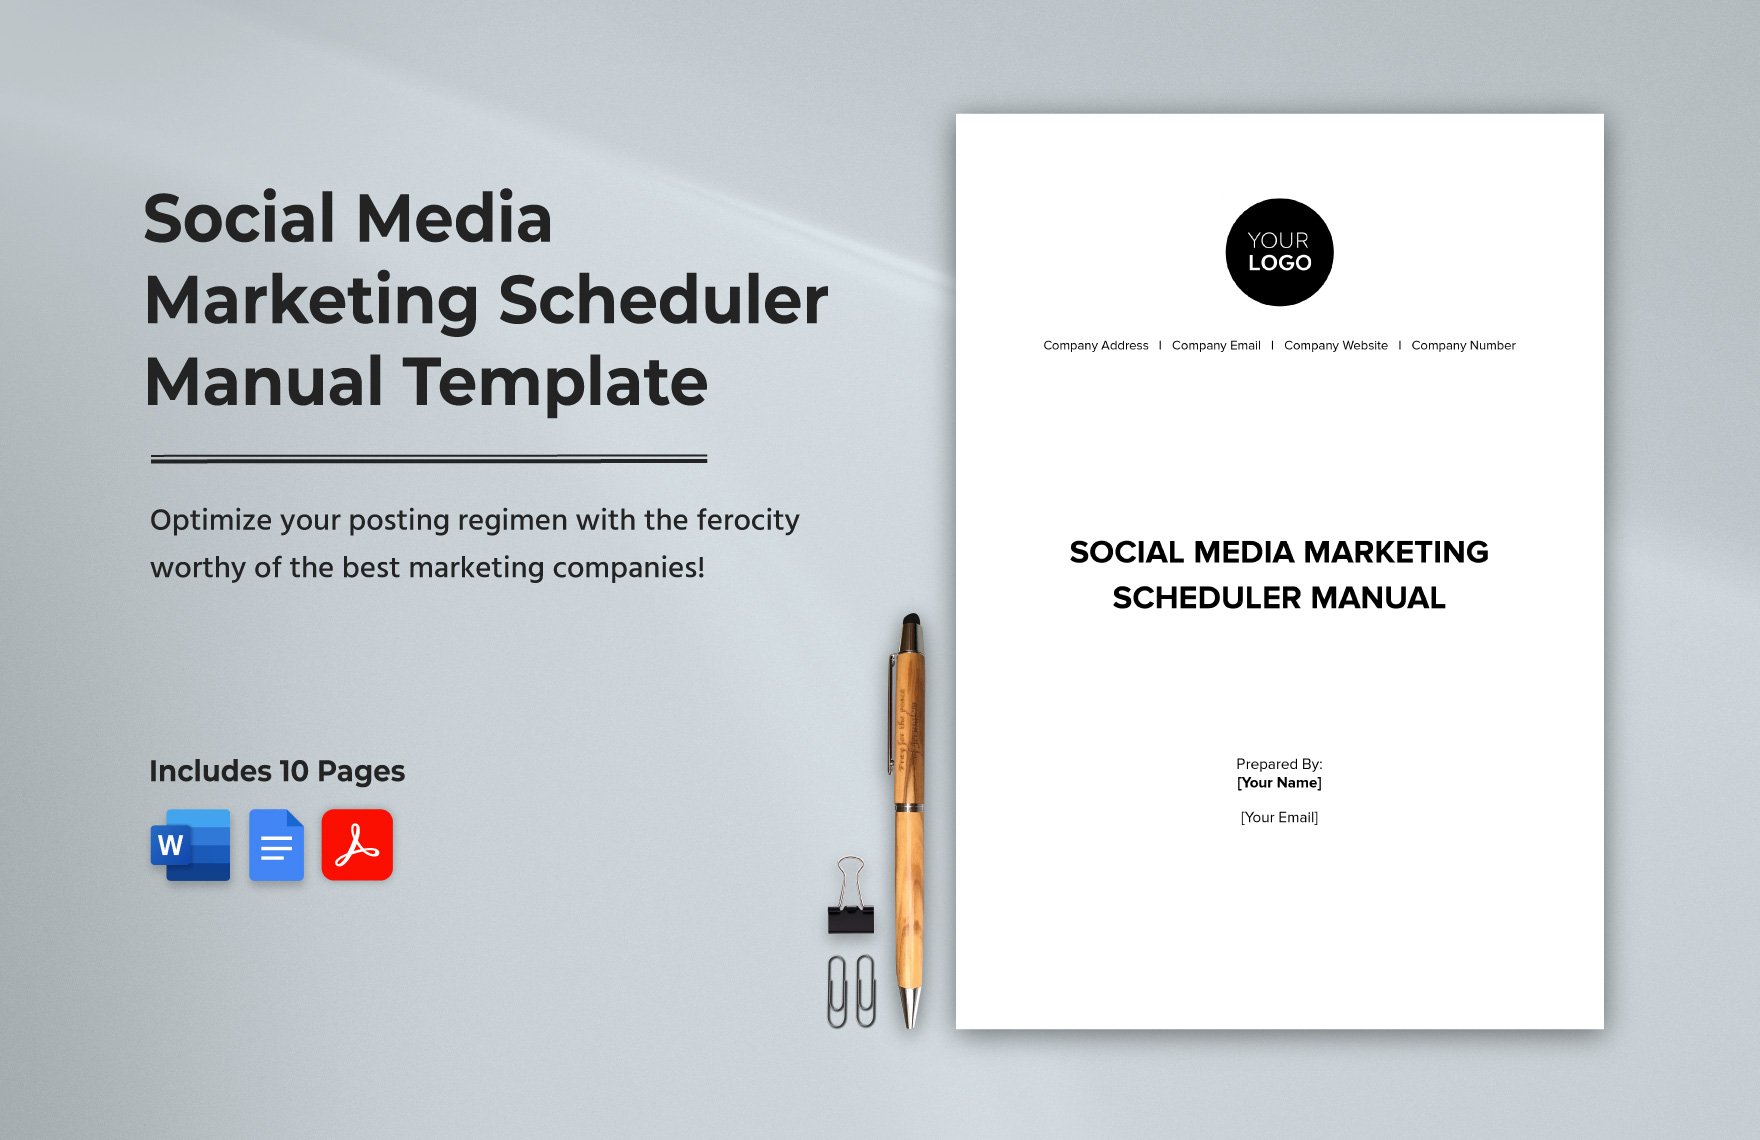 Social Media Marketing Scheduler Manual Template